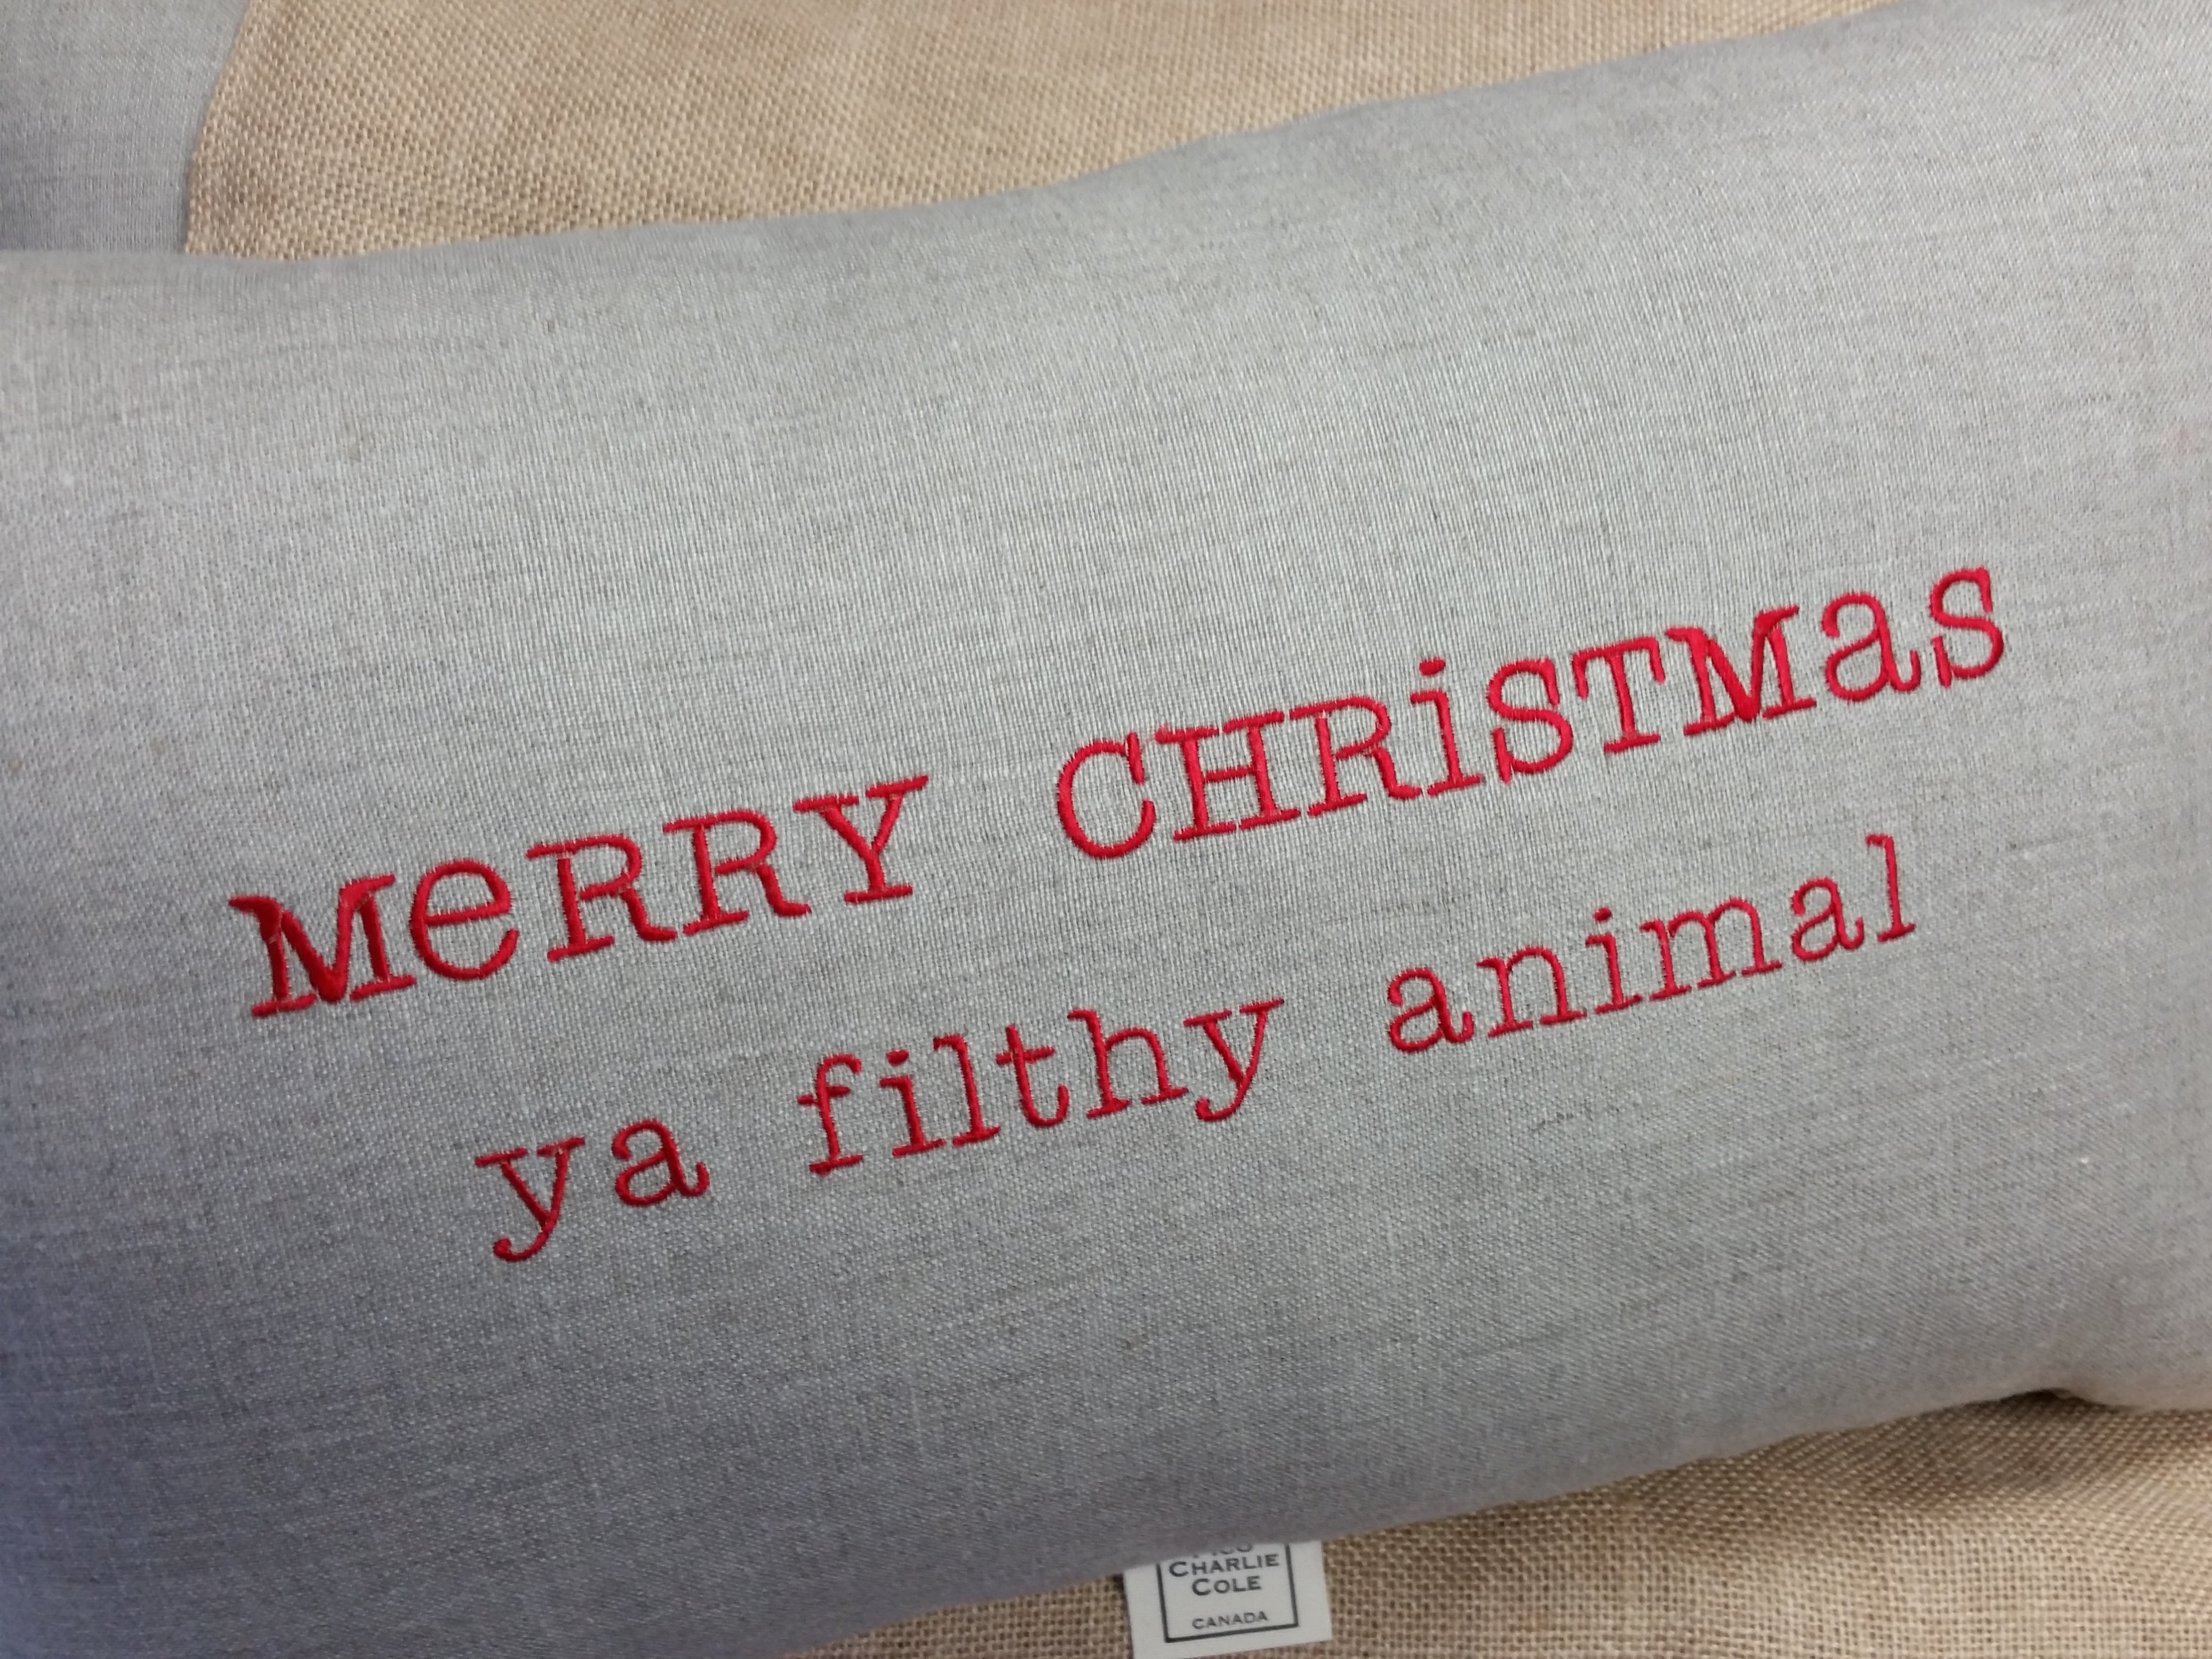 Merry Christmas Filthy Animal Pillow